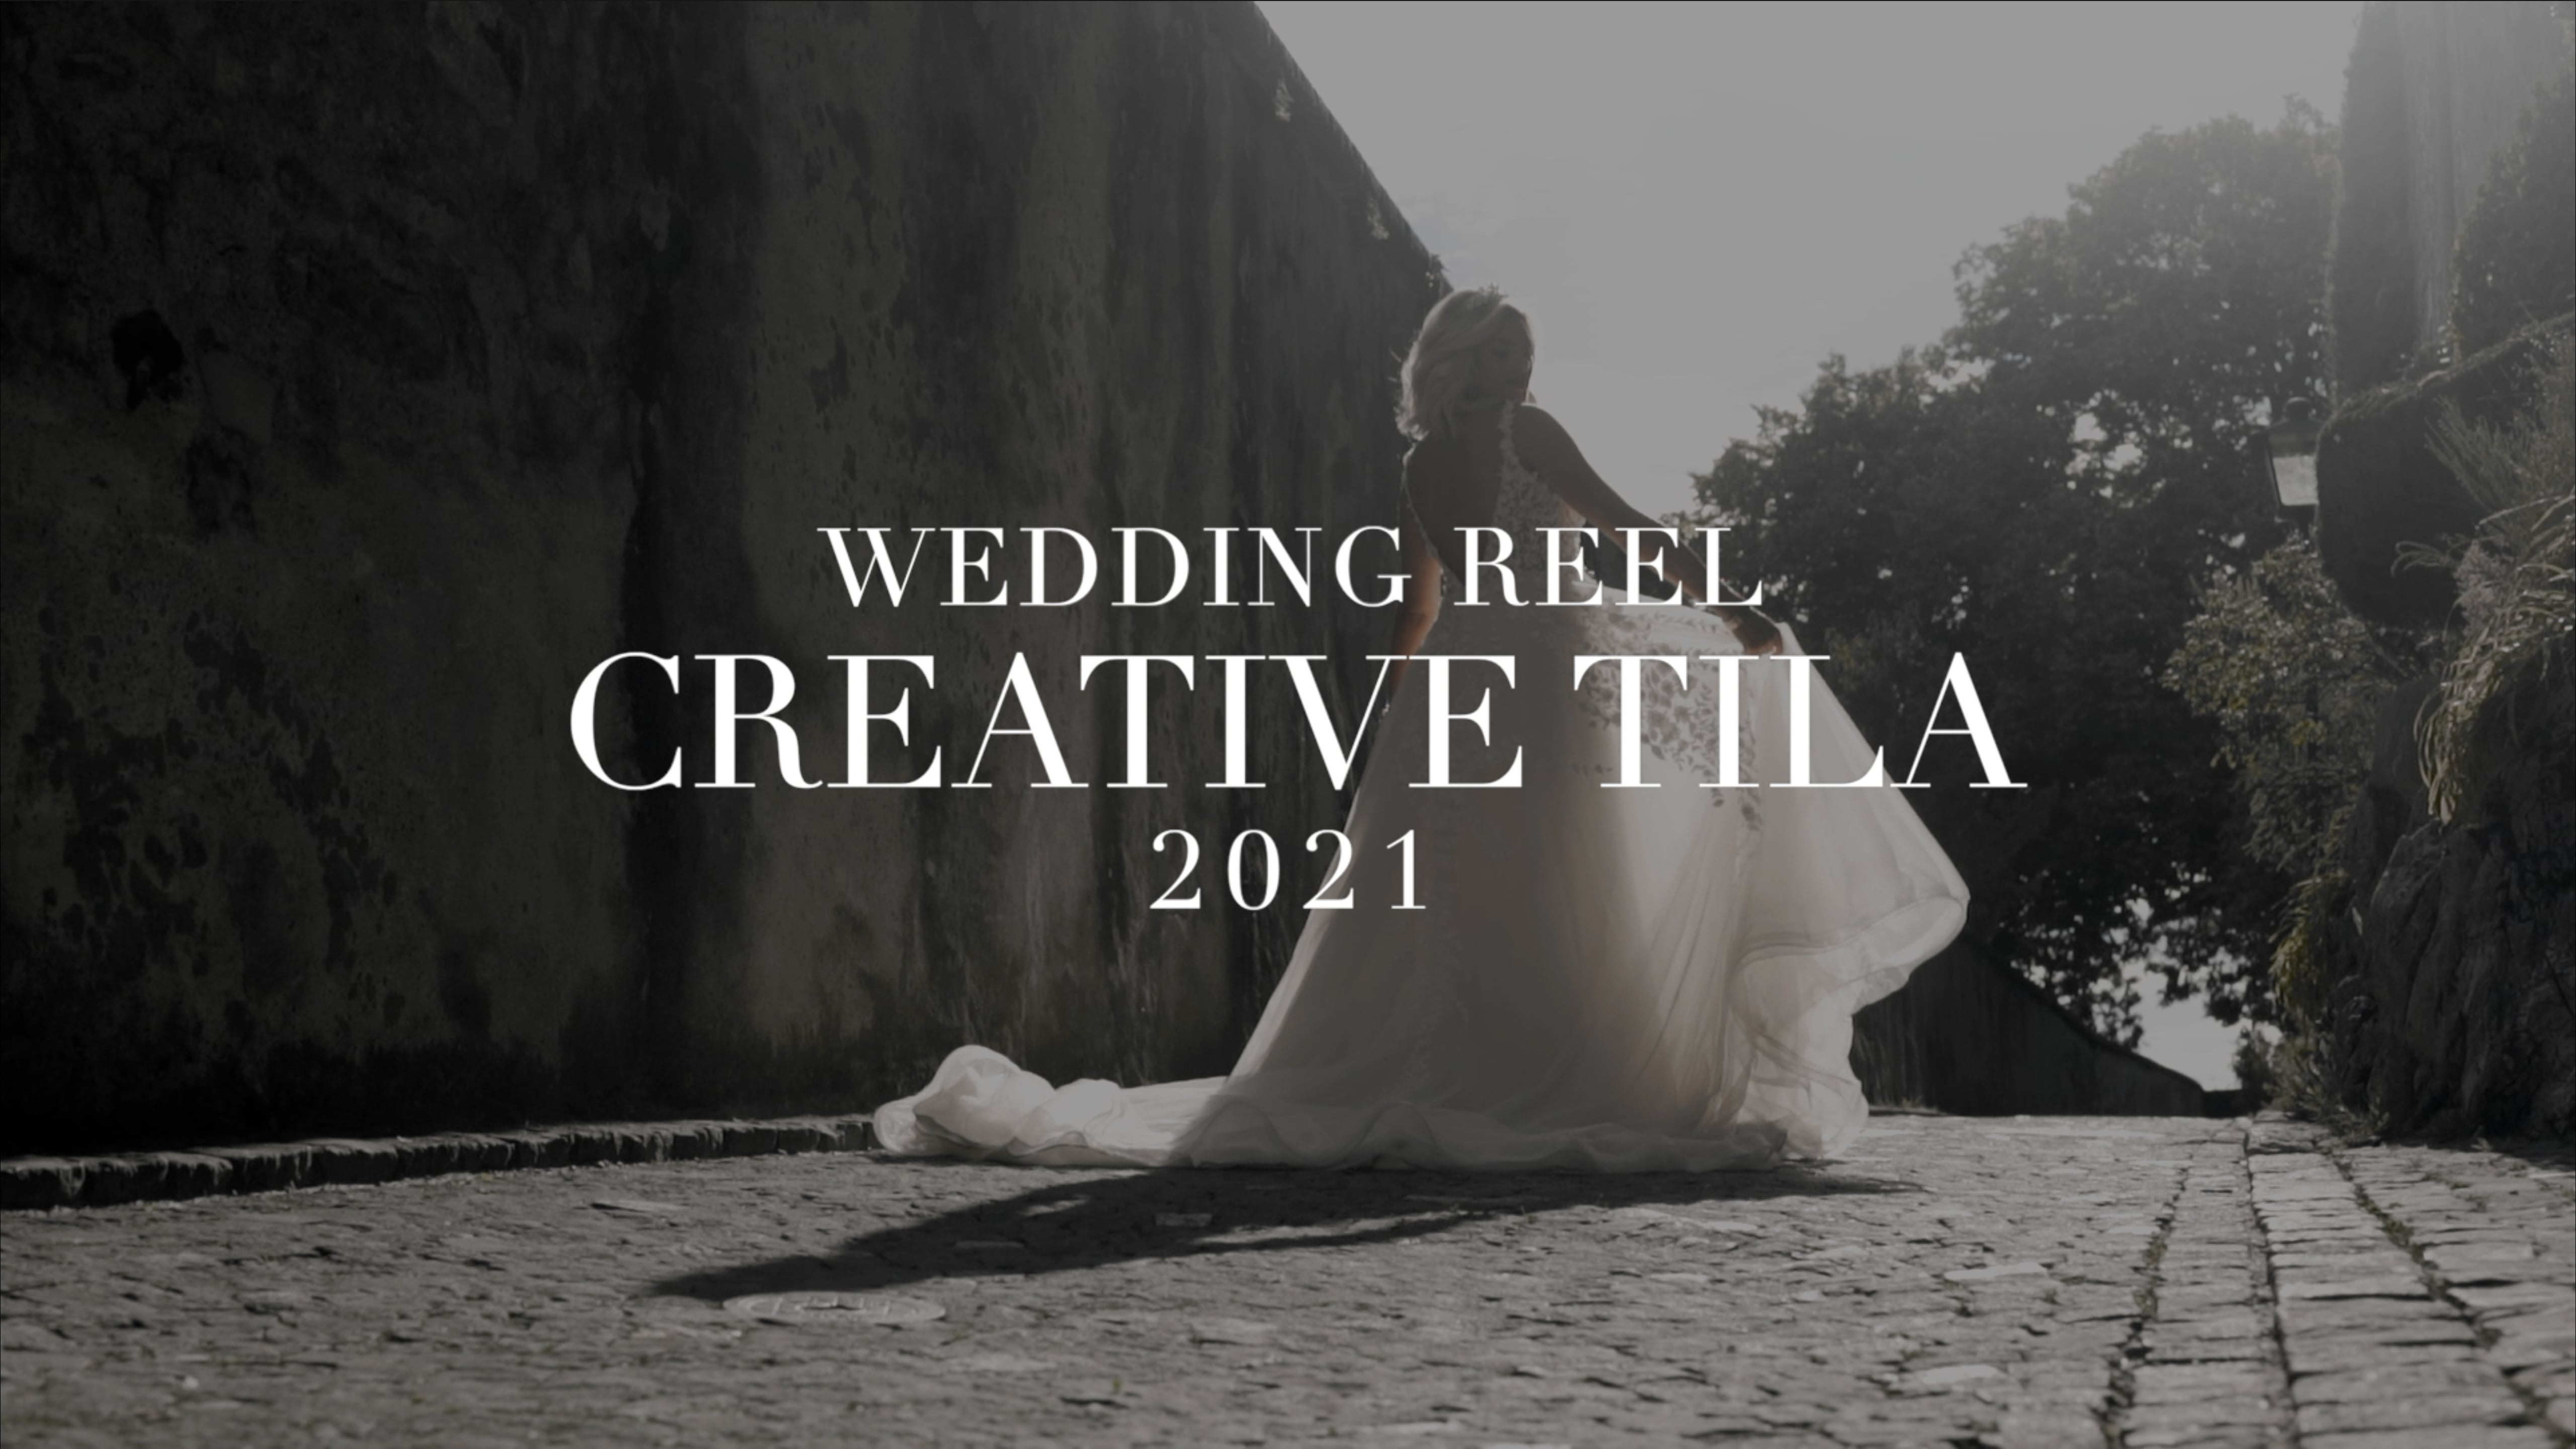 WEDDING REEL 2021 | CREATIVE TILA